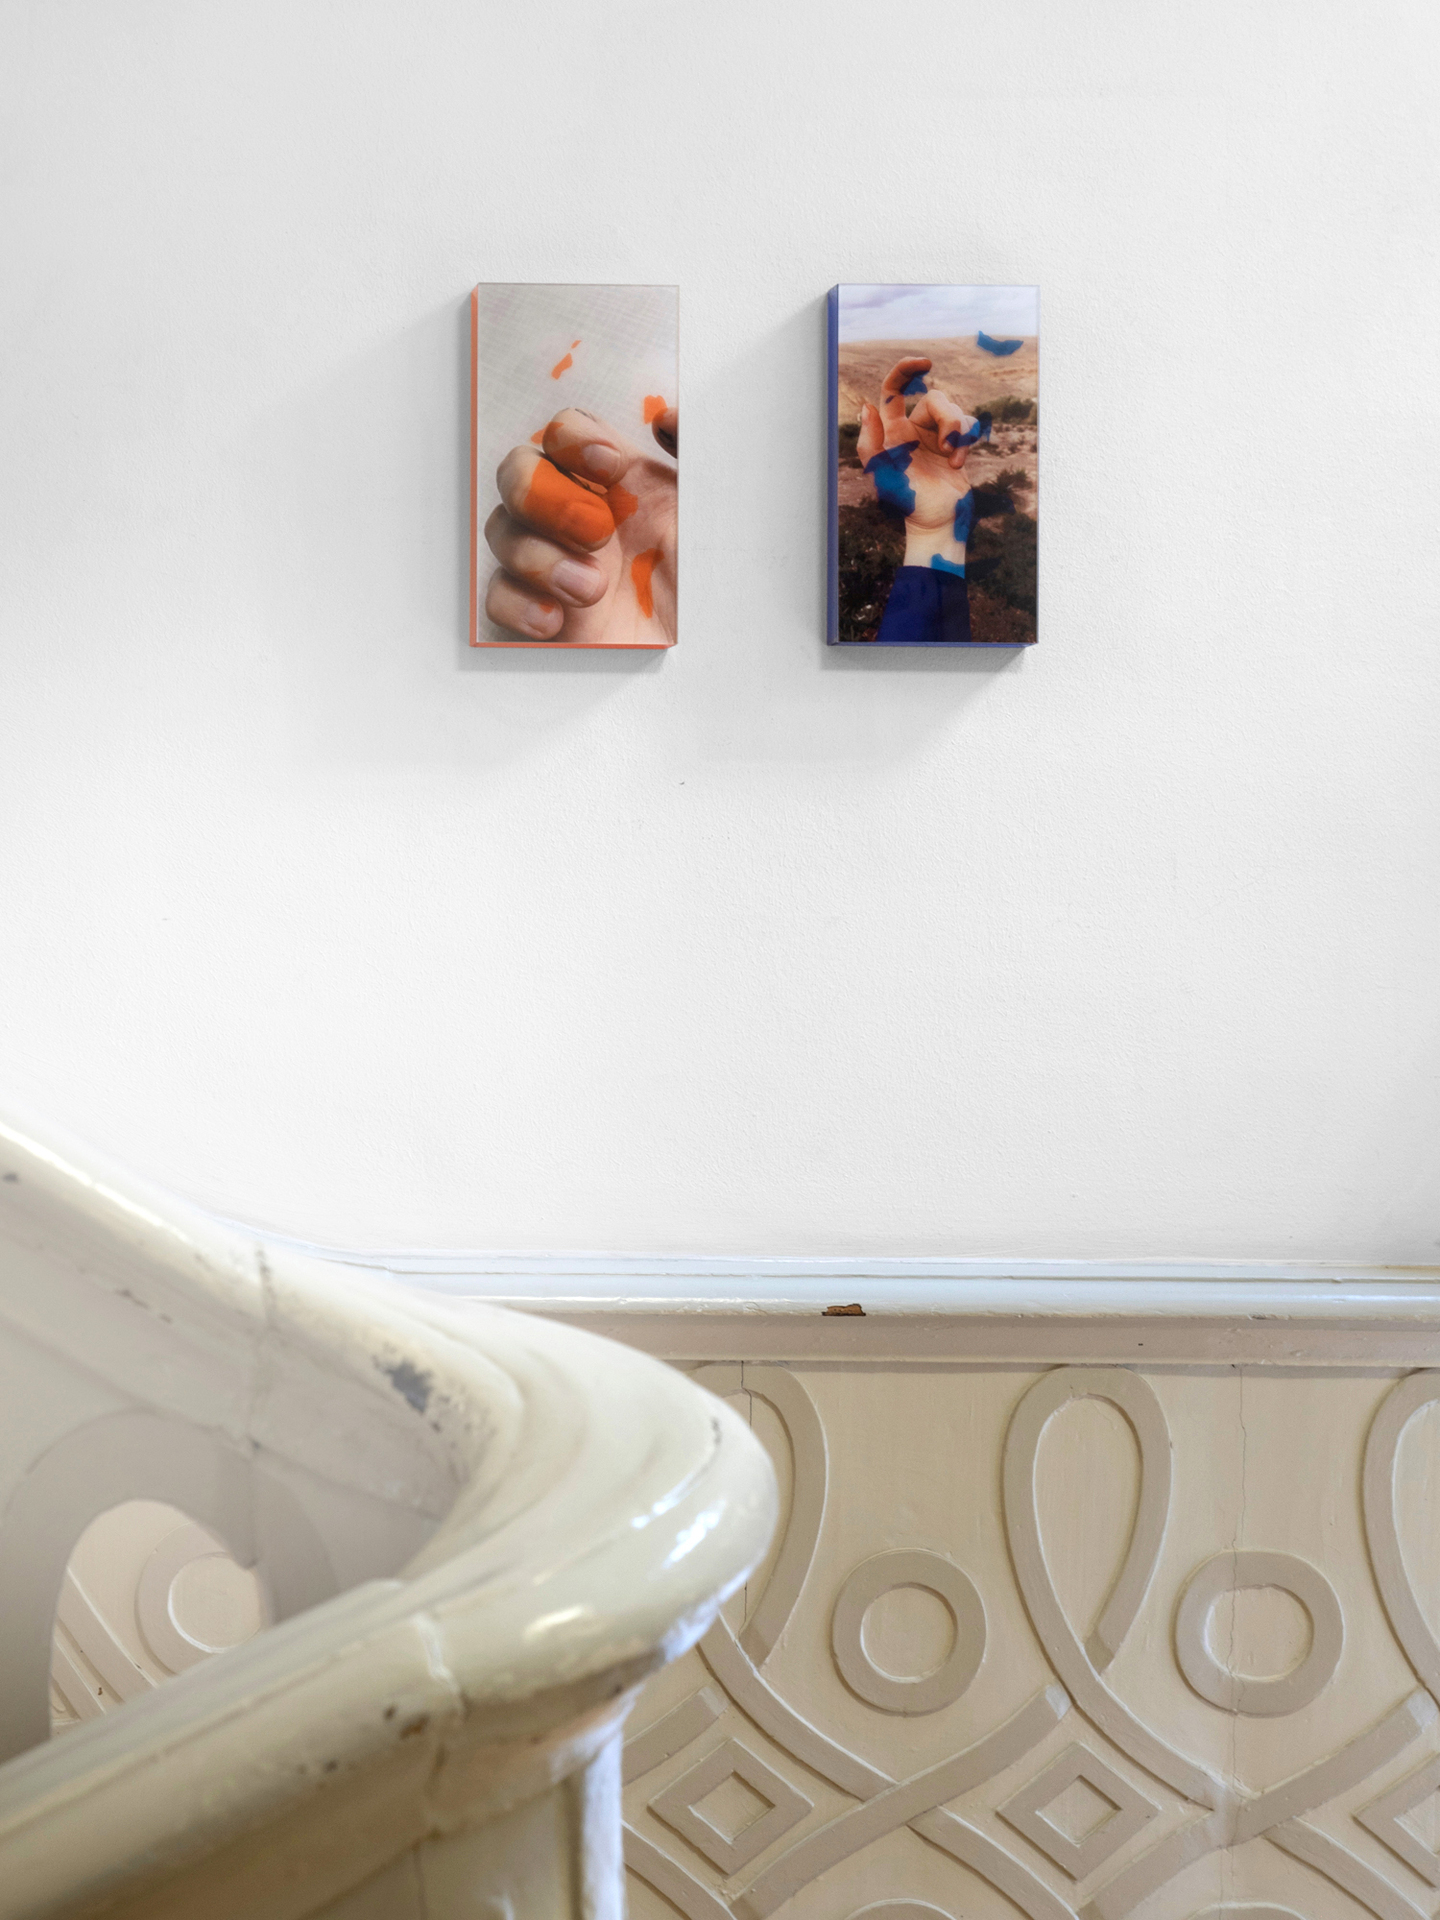 Lena M. Emrich/Zuza Golińska, "Working Nails", 2020, Photo mounted on plexiglass, Effect foil Set of 2, 17 x 30,3 x 3,5 cm each